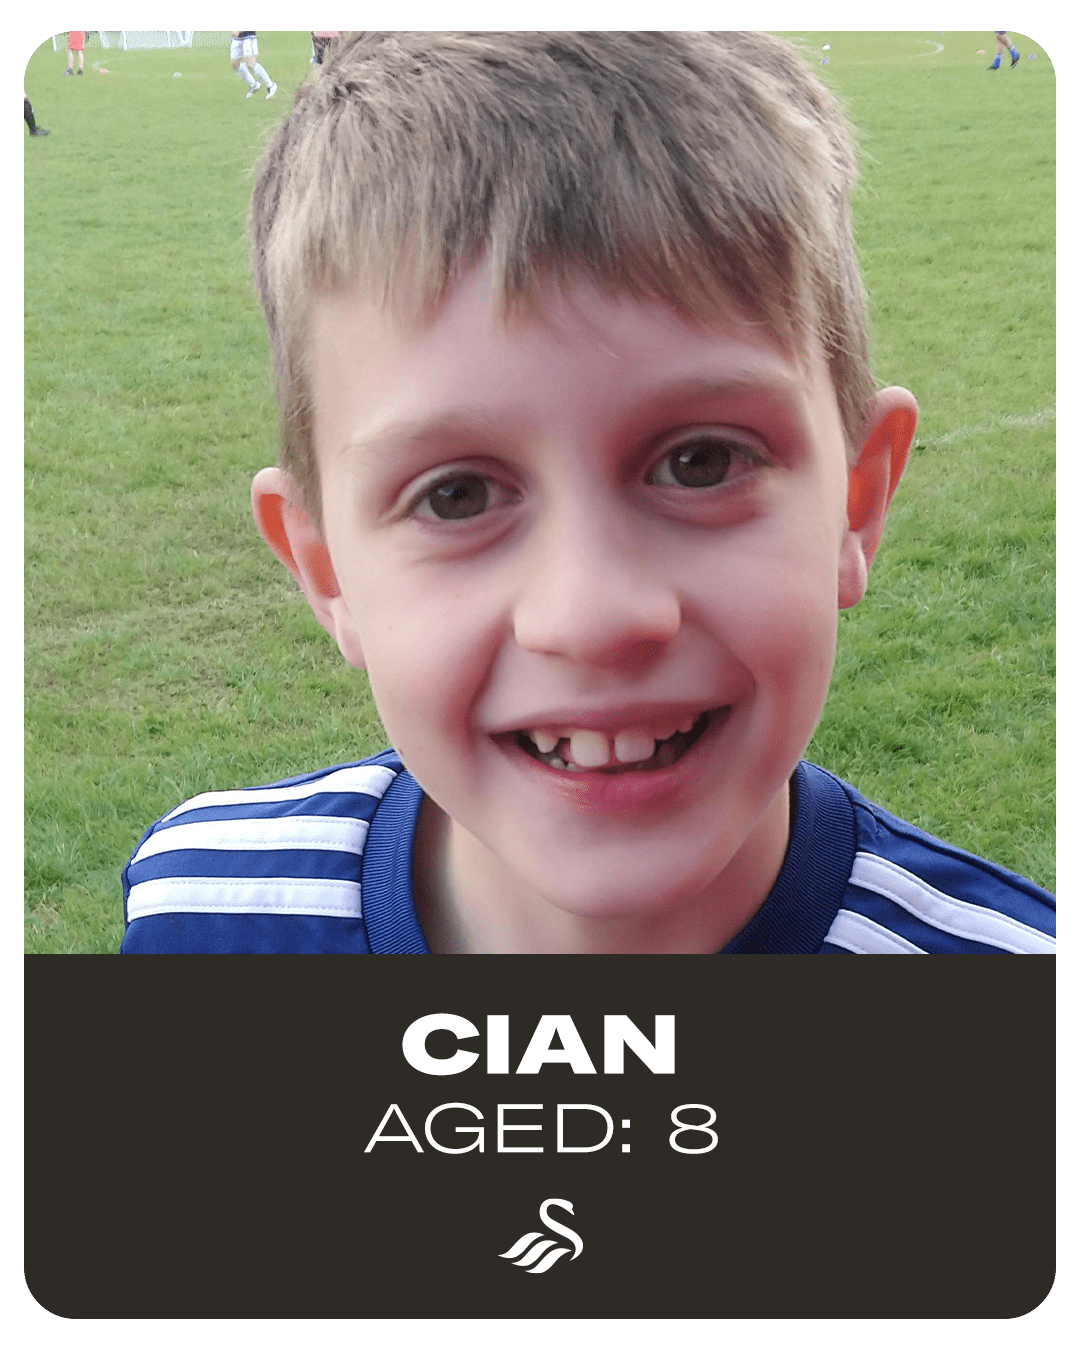 Cian, aged 8